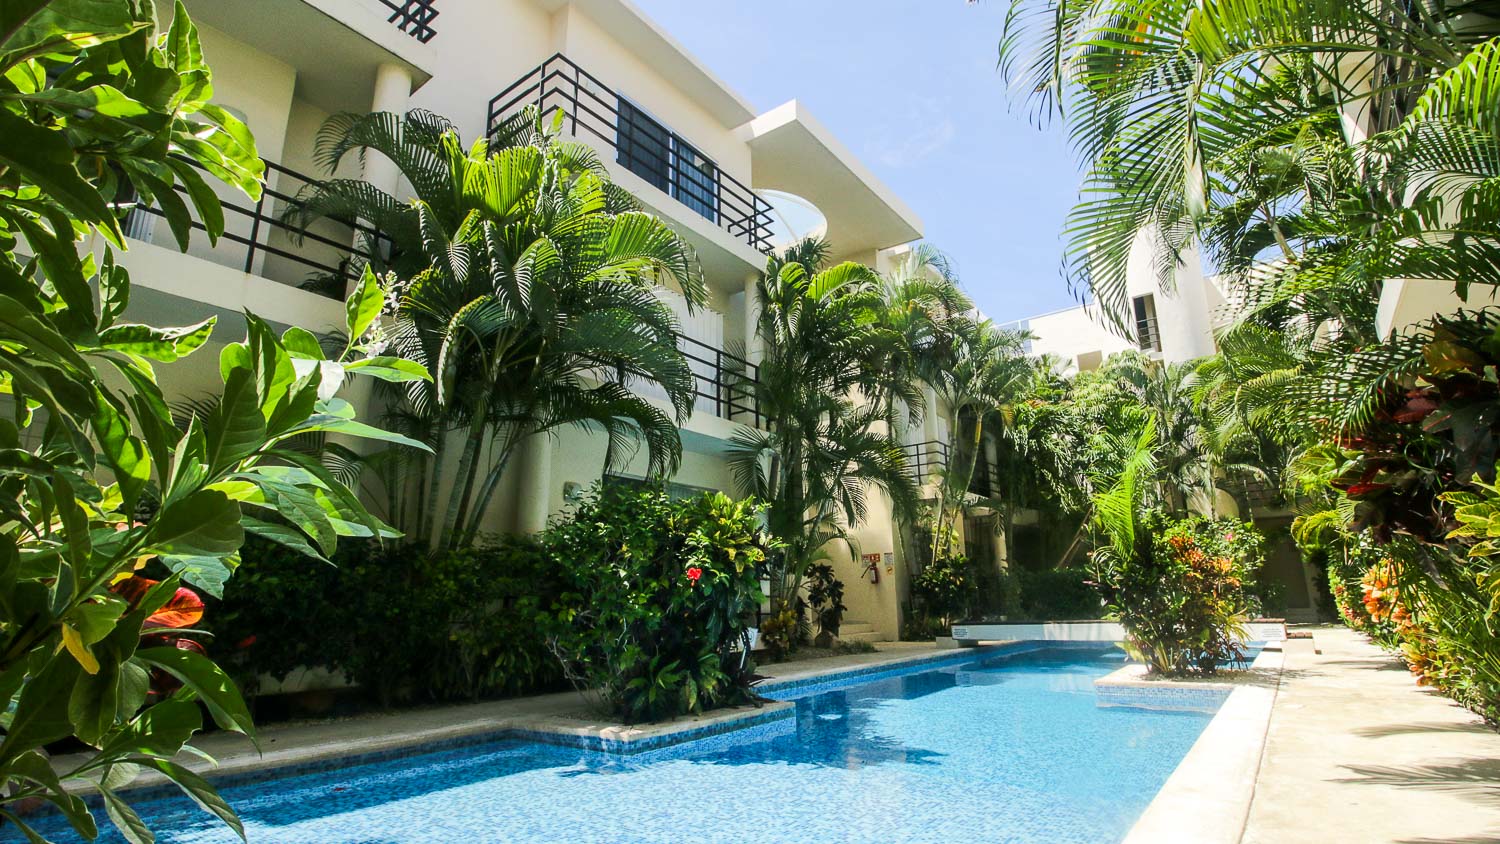 Playa del Carmen properties under $300K